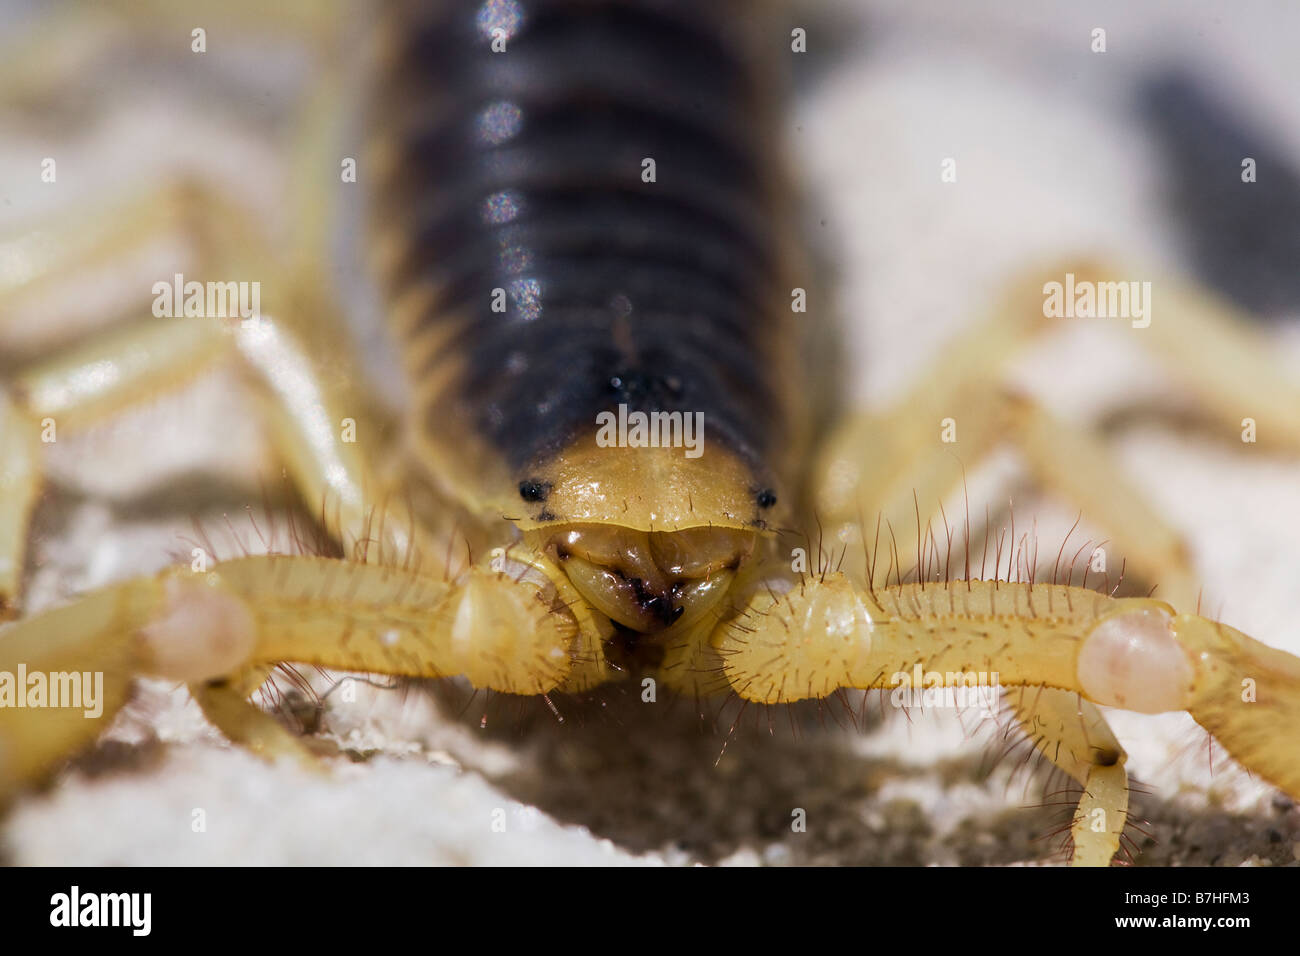 A captive Desert Hairy Scorpion, Hadrurus arizonensis, native to deserts of the southwestern United States and Mexico. Stock Photo